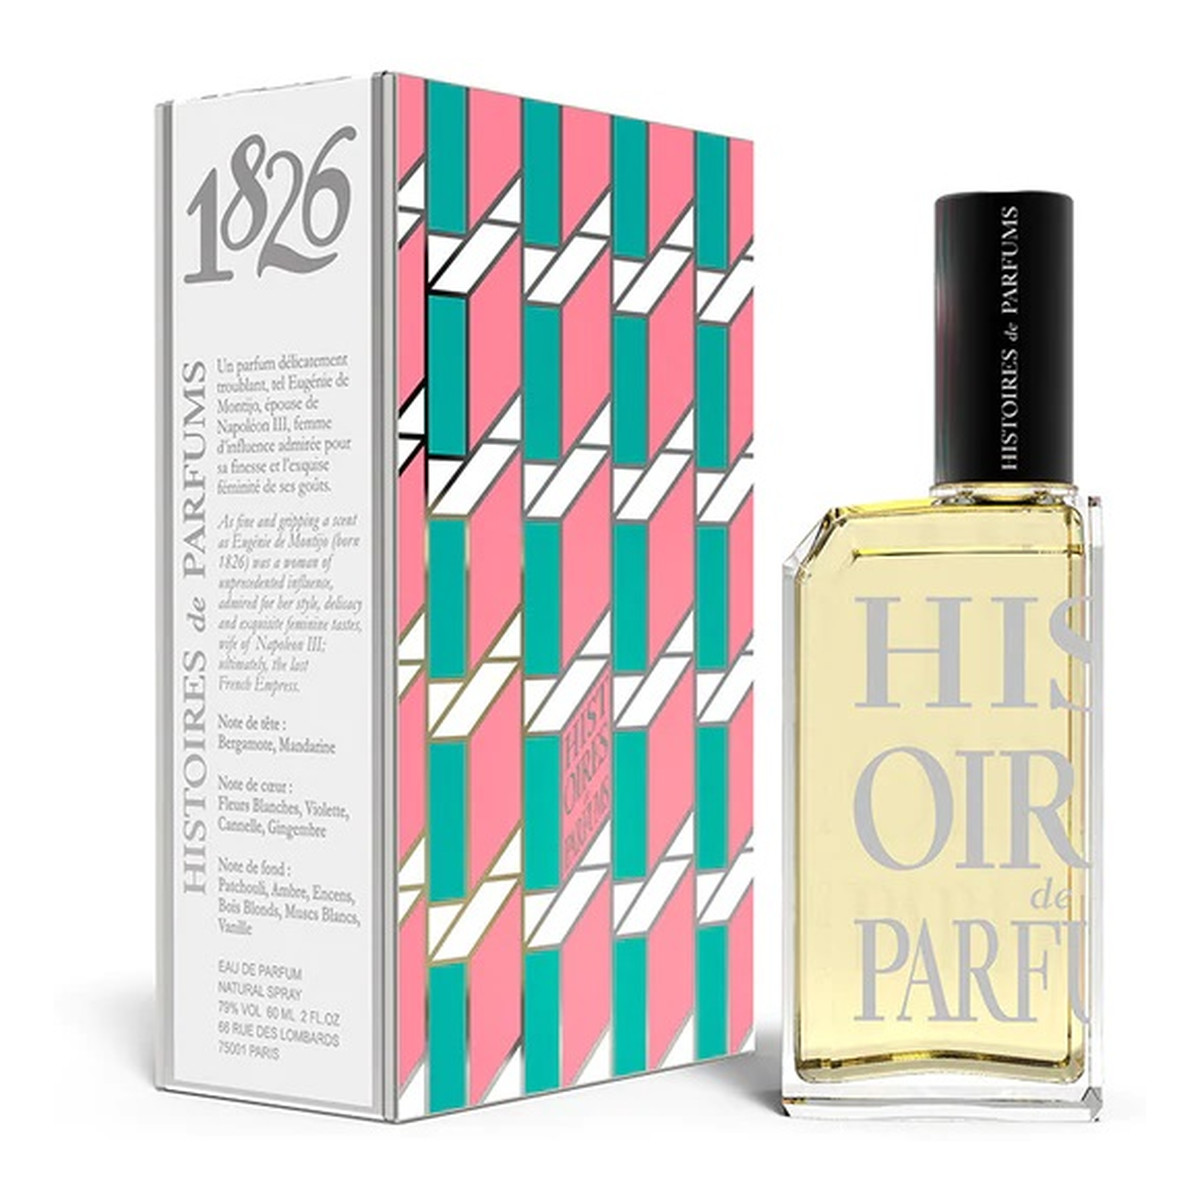 Histoires De Parfums 1826 Woda perfumowana spray 60ml